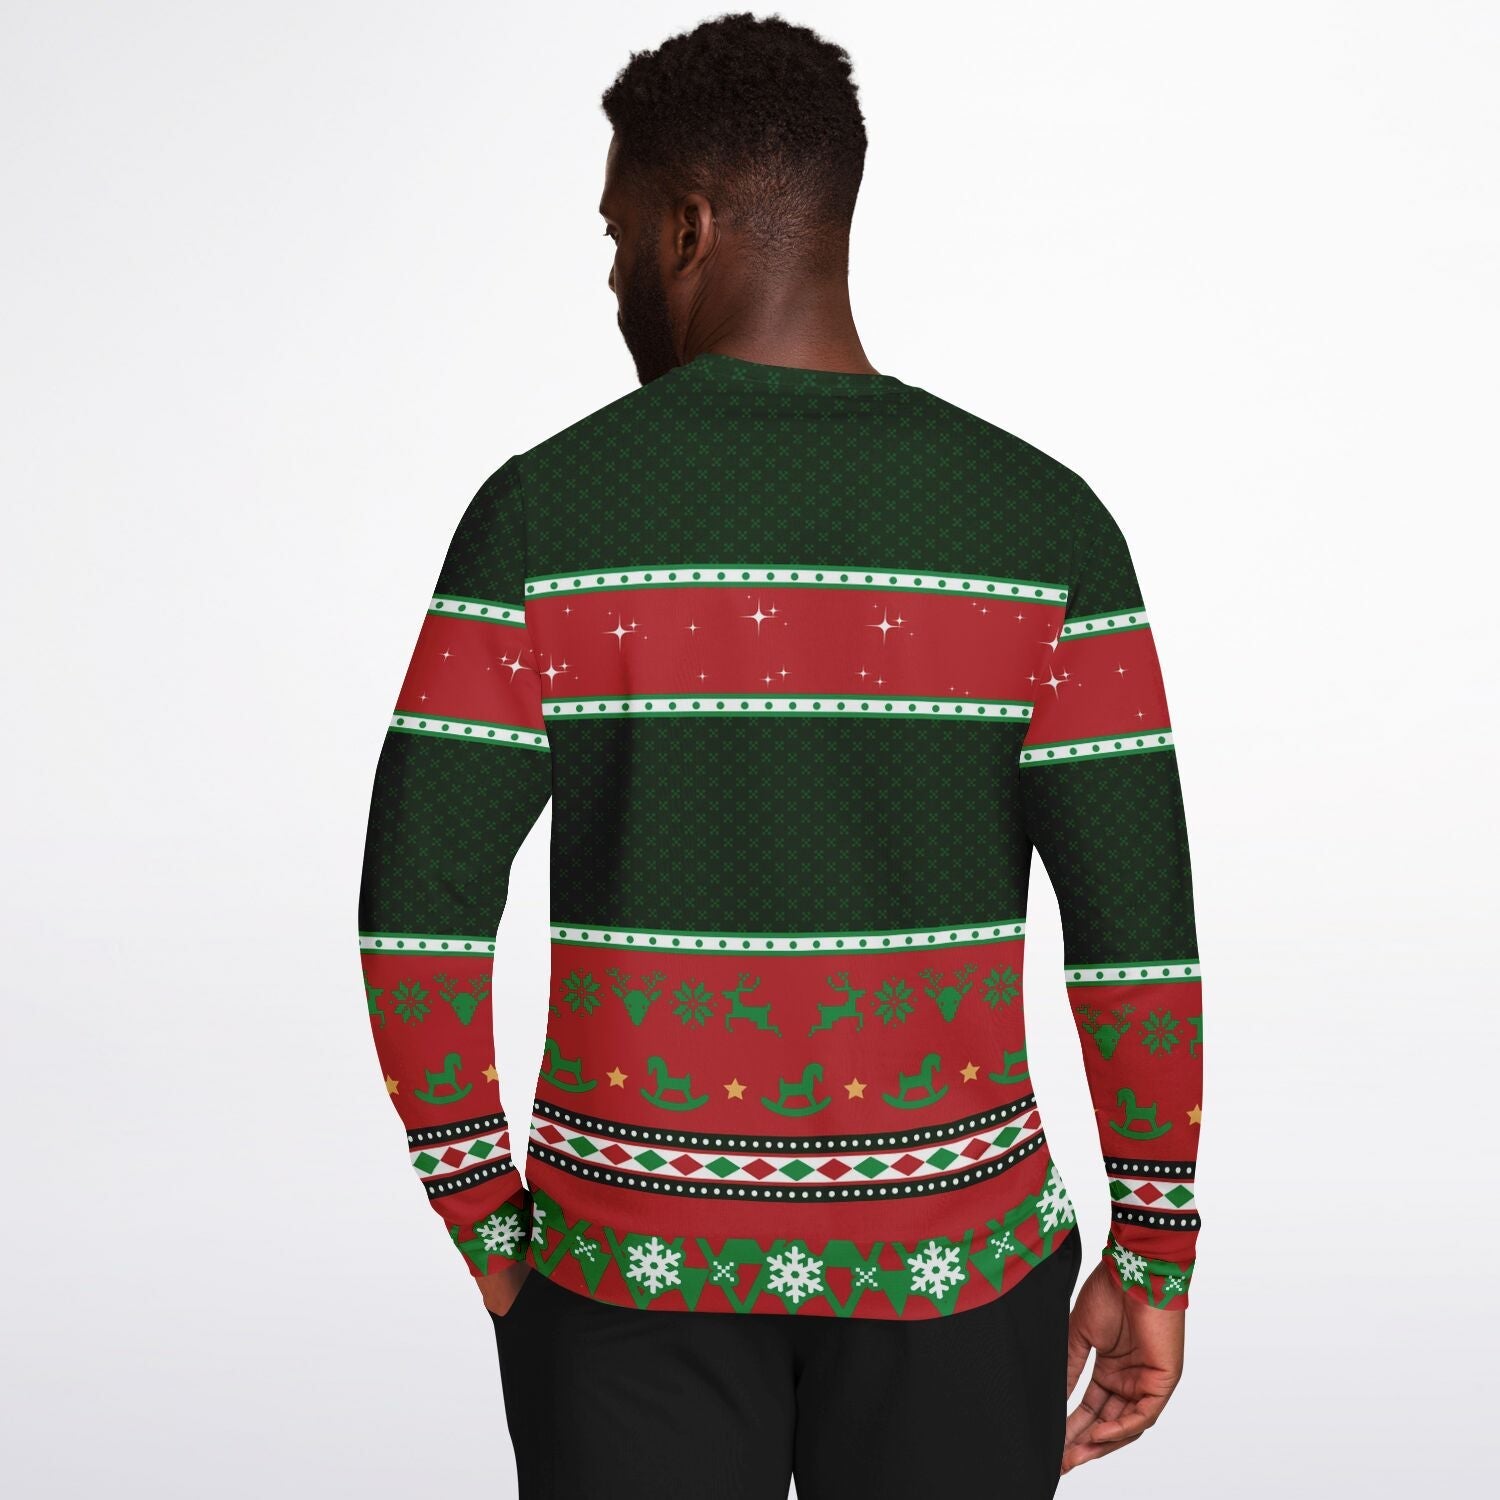 Reason for the Naughty List Ugly Christmas Sweatshirt Fashion Sweatshirt - AOP Subliminator 